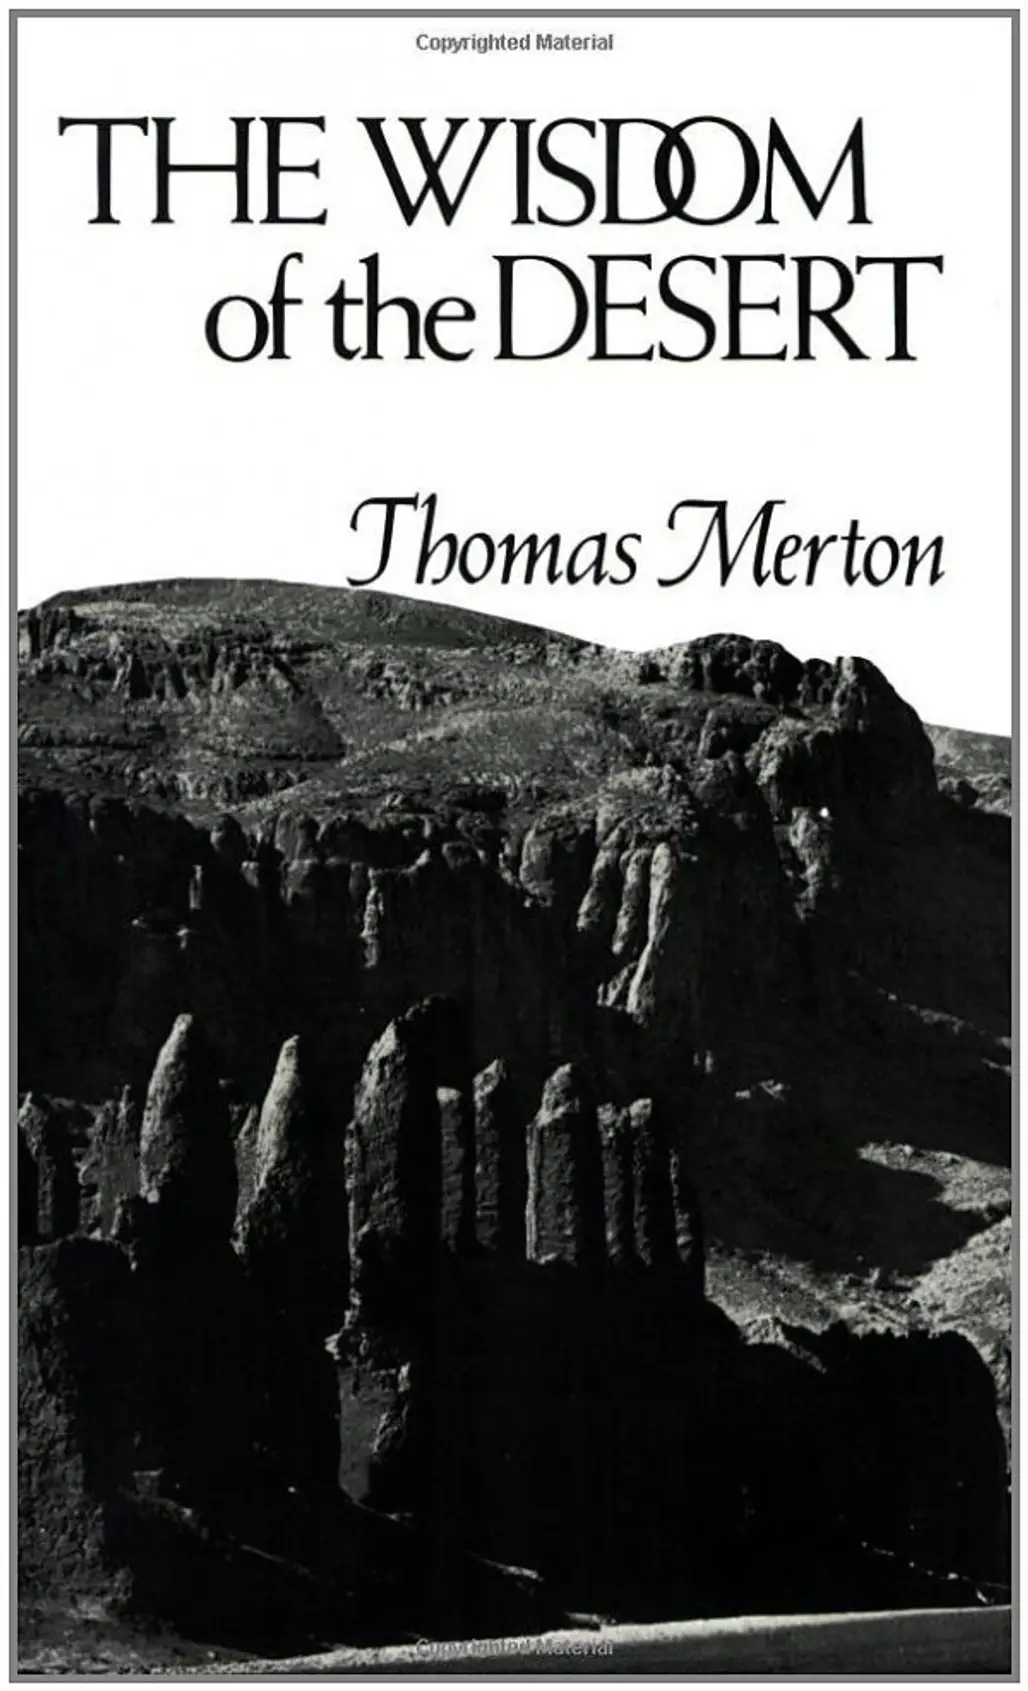 The Wisdom of the Desert by Thomas Merton